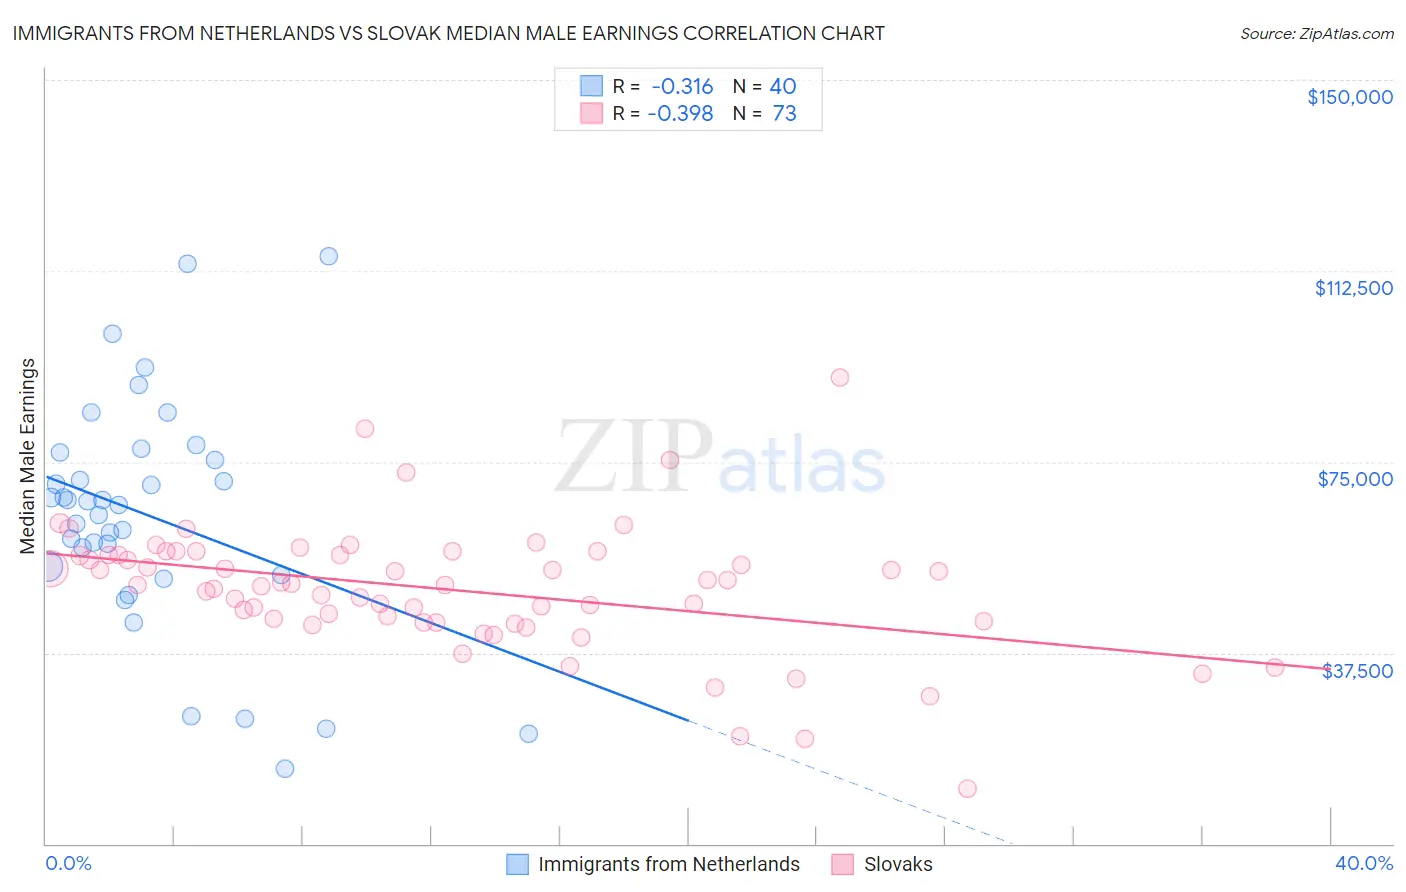 Immigrants from Netherlands vs Slovak Median Male Earnings